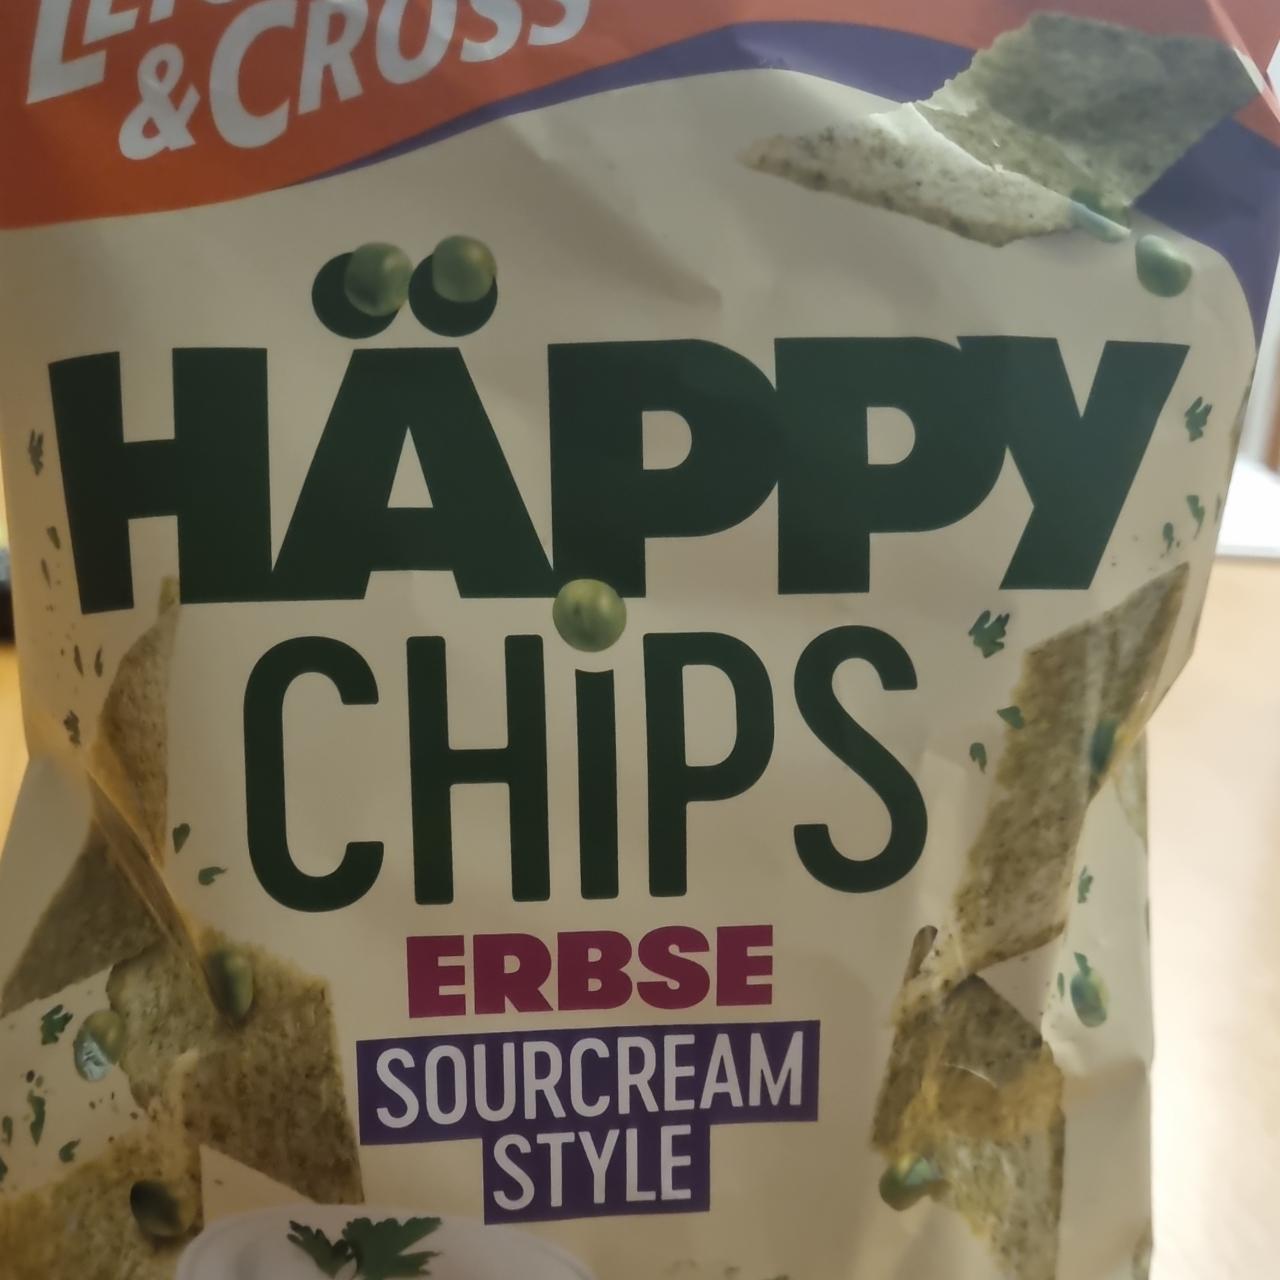 Fotografie - Happy chips Erbse sourcream style leicht & cross